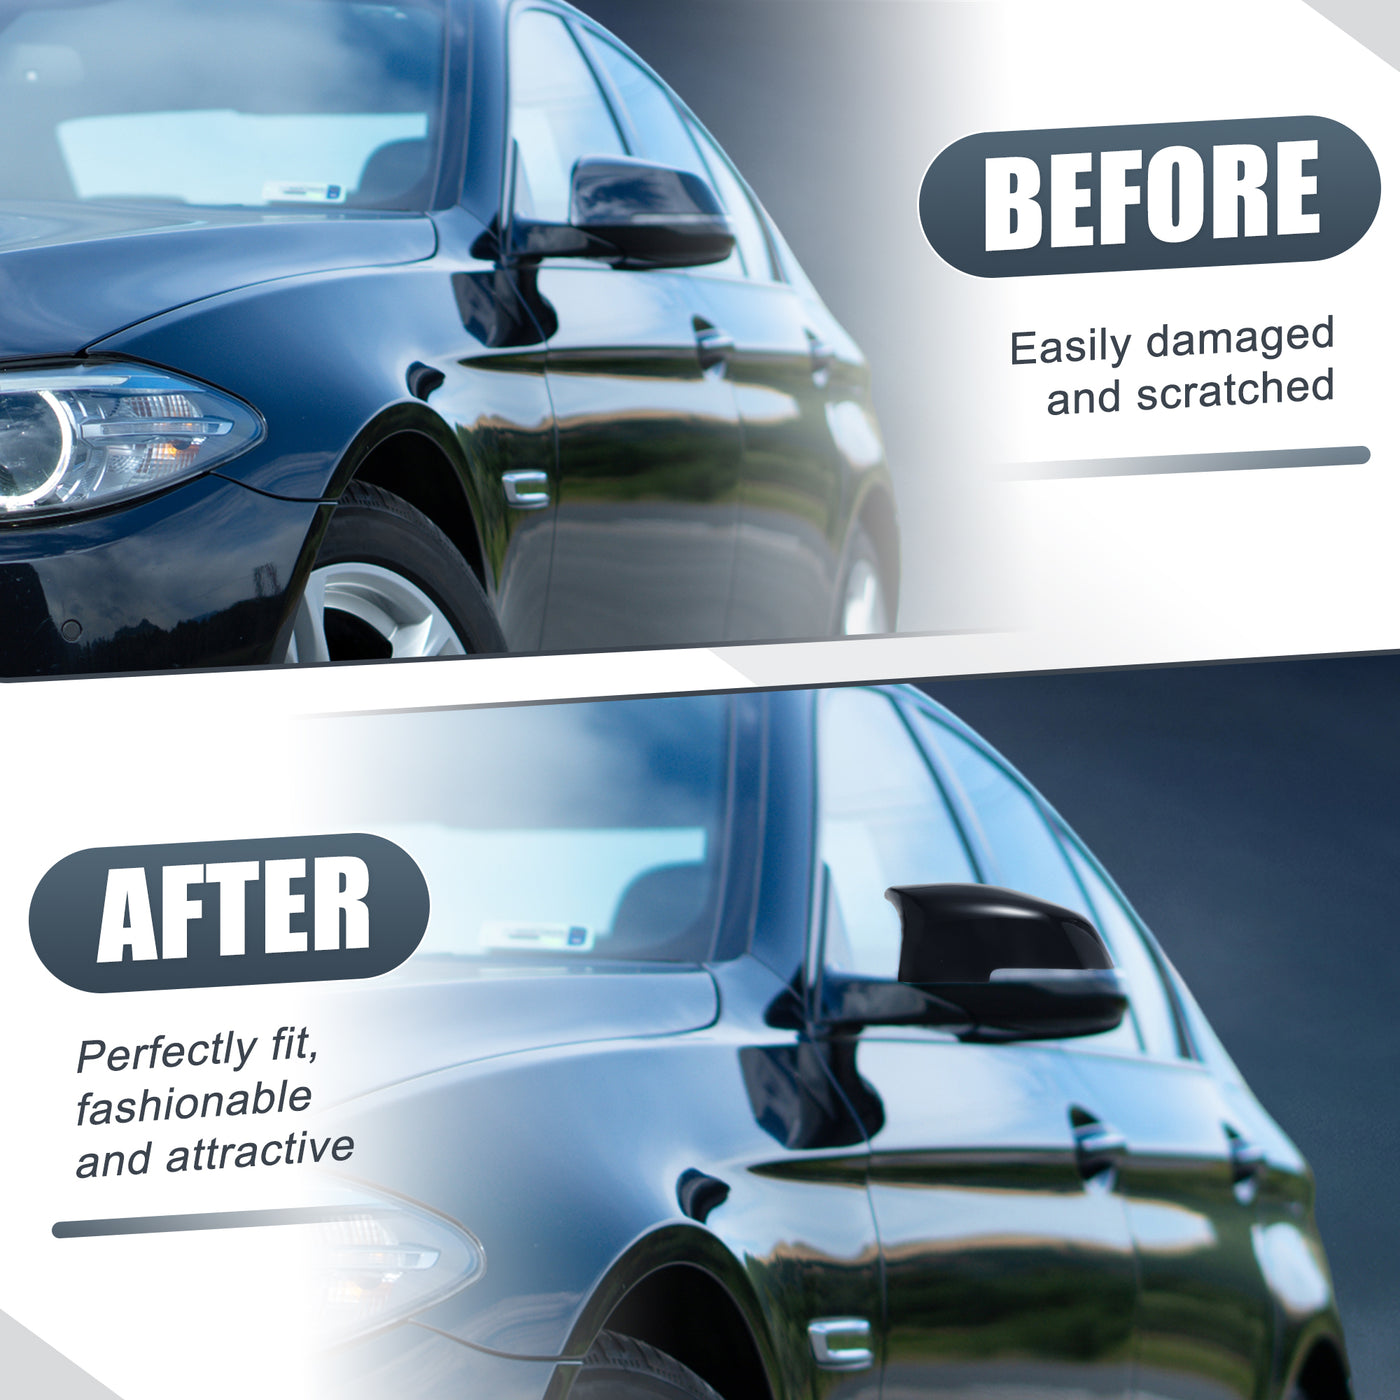 X AUTOHAUX Pair Car Rear View Driver Passenger Side Mirror Cover Cap Replacement Gloss Black for BMW F10 F11 F18 GT F07 F06 F12 F13 F01 F02 2014-2016 Mirror Guard Covers